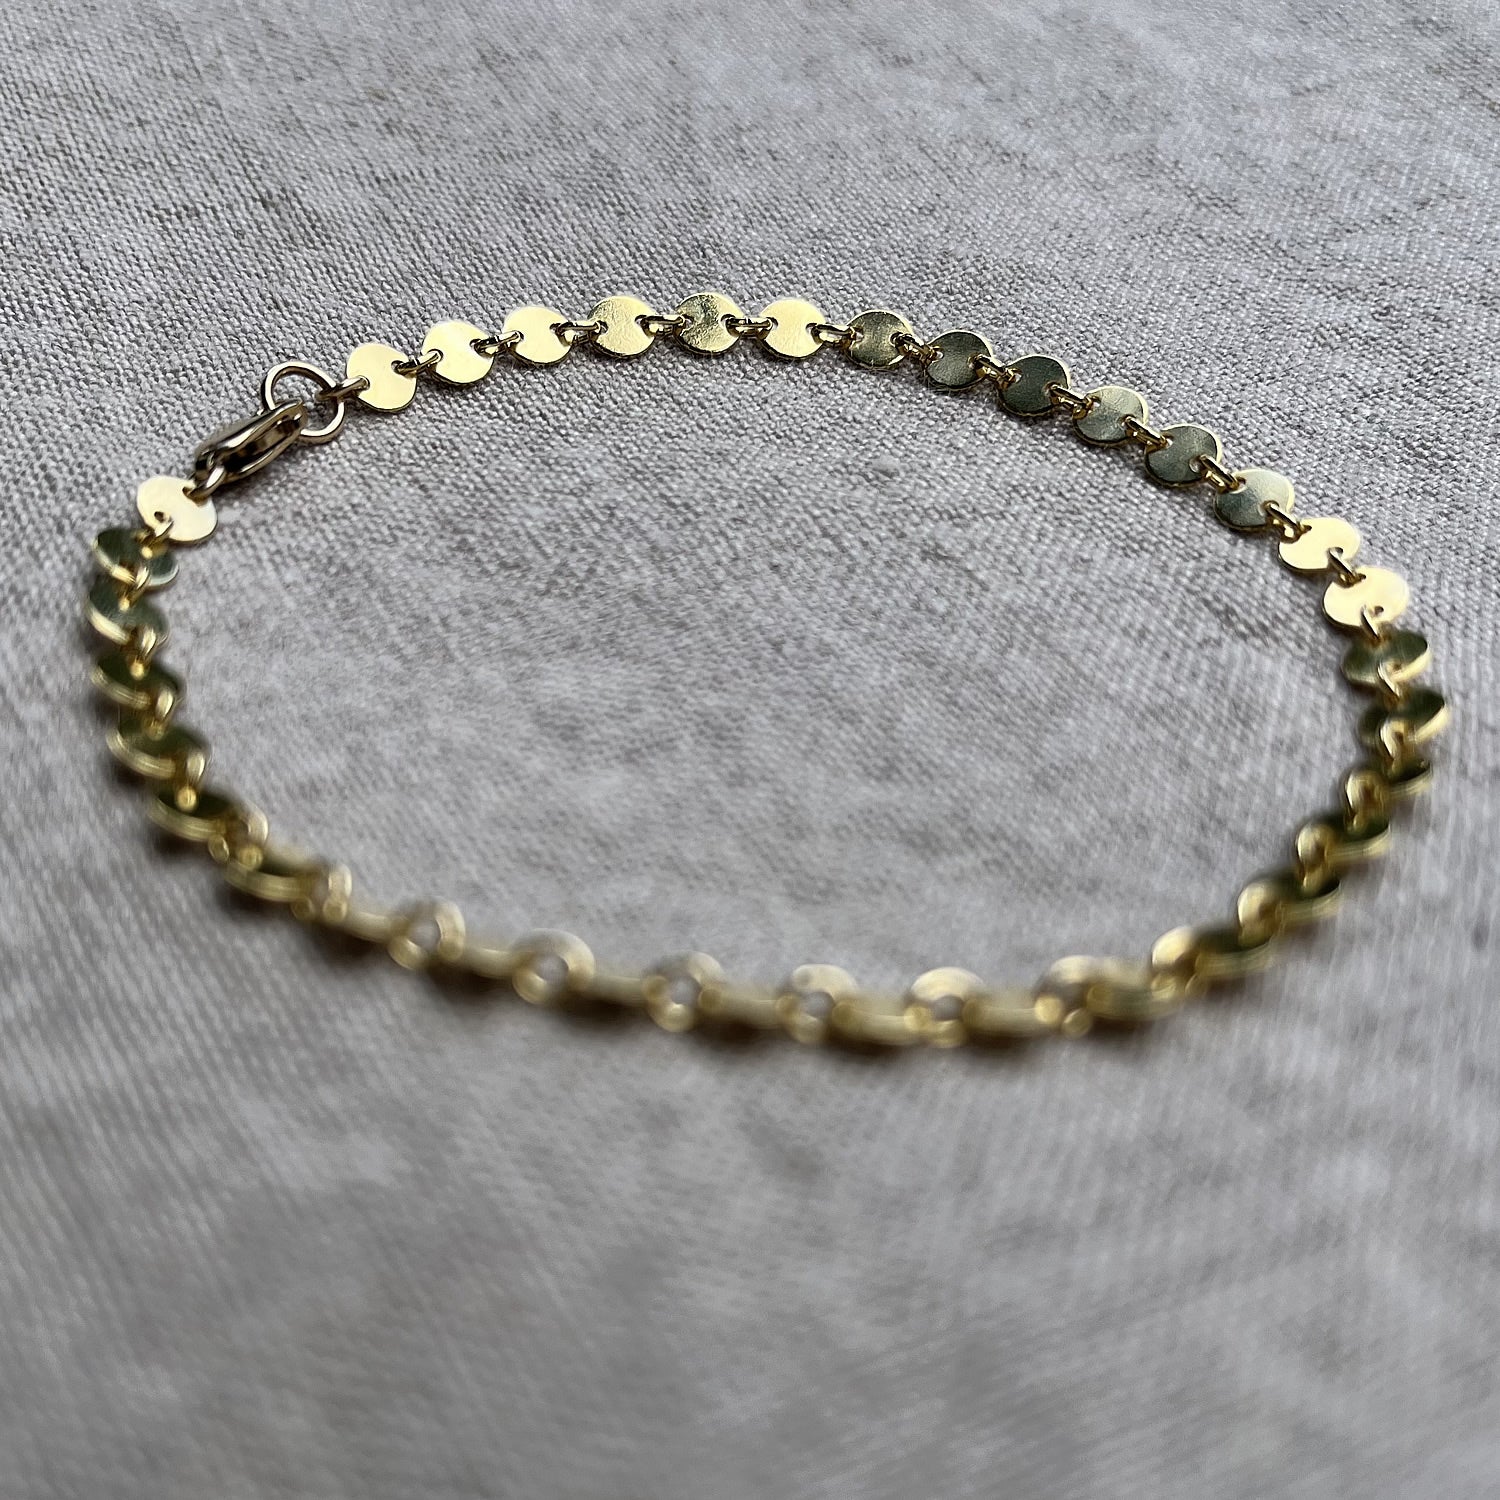 Fine clip chain bracelet with coin/CZ initial charm - Von Treskow